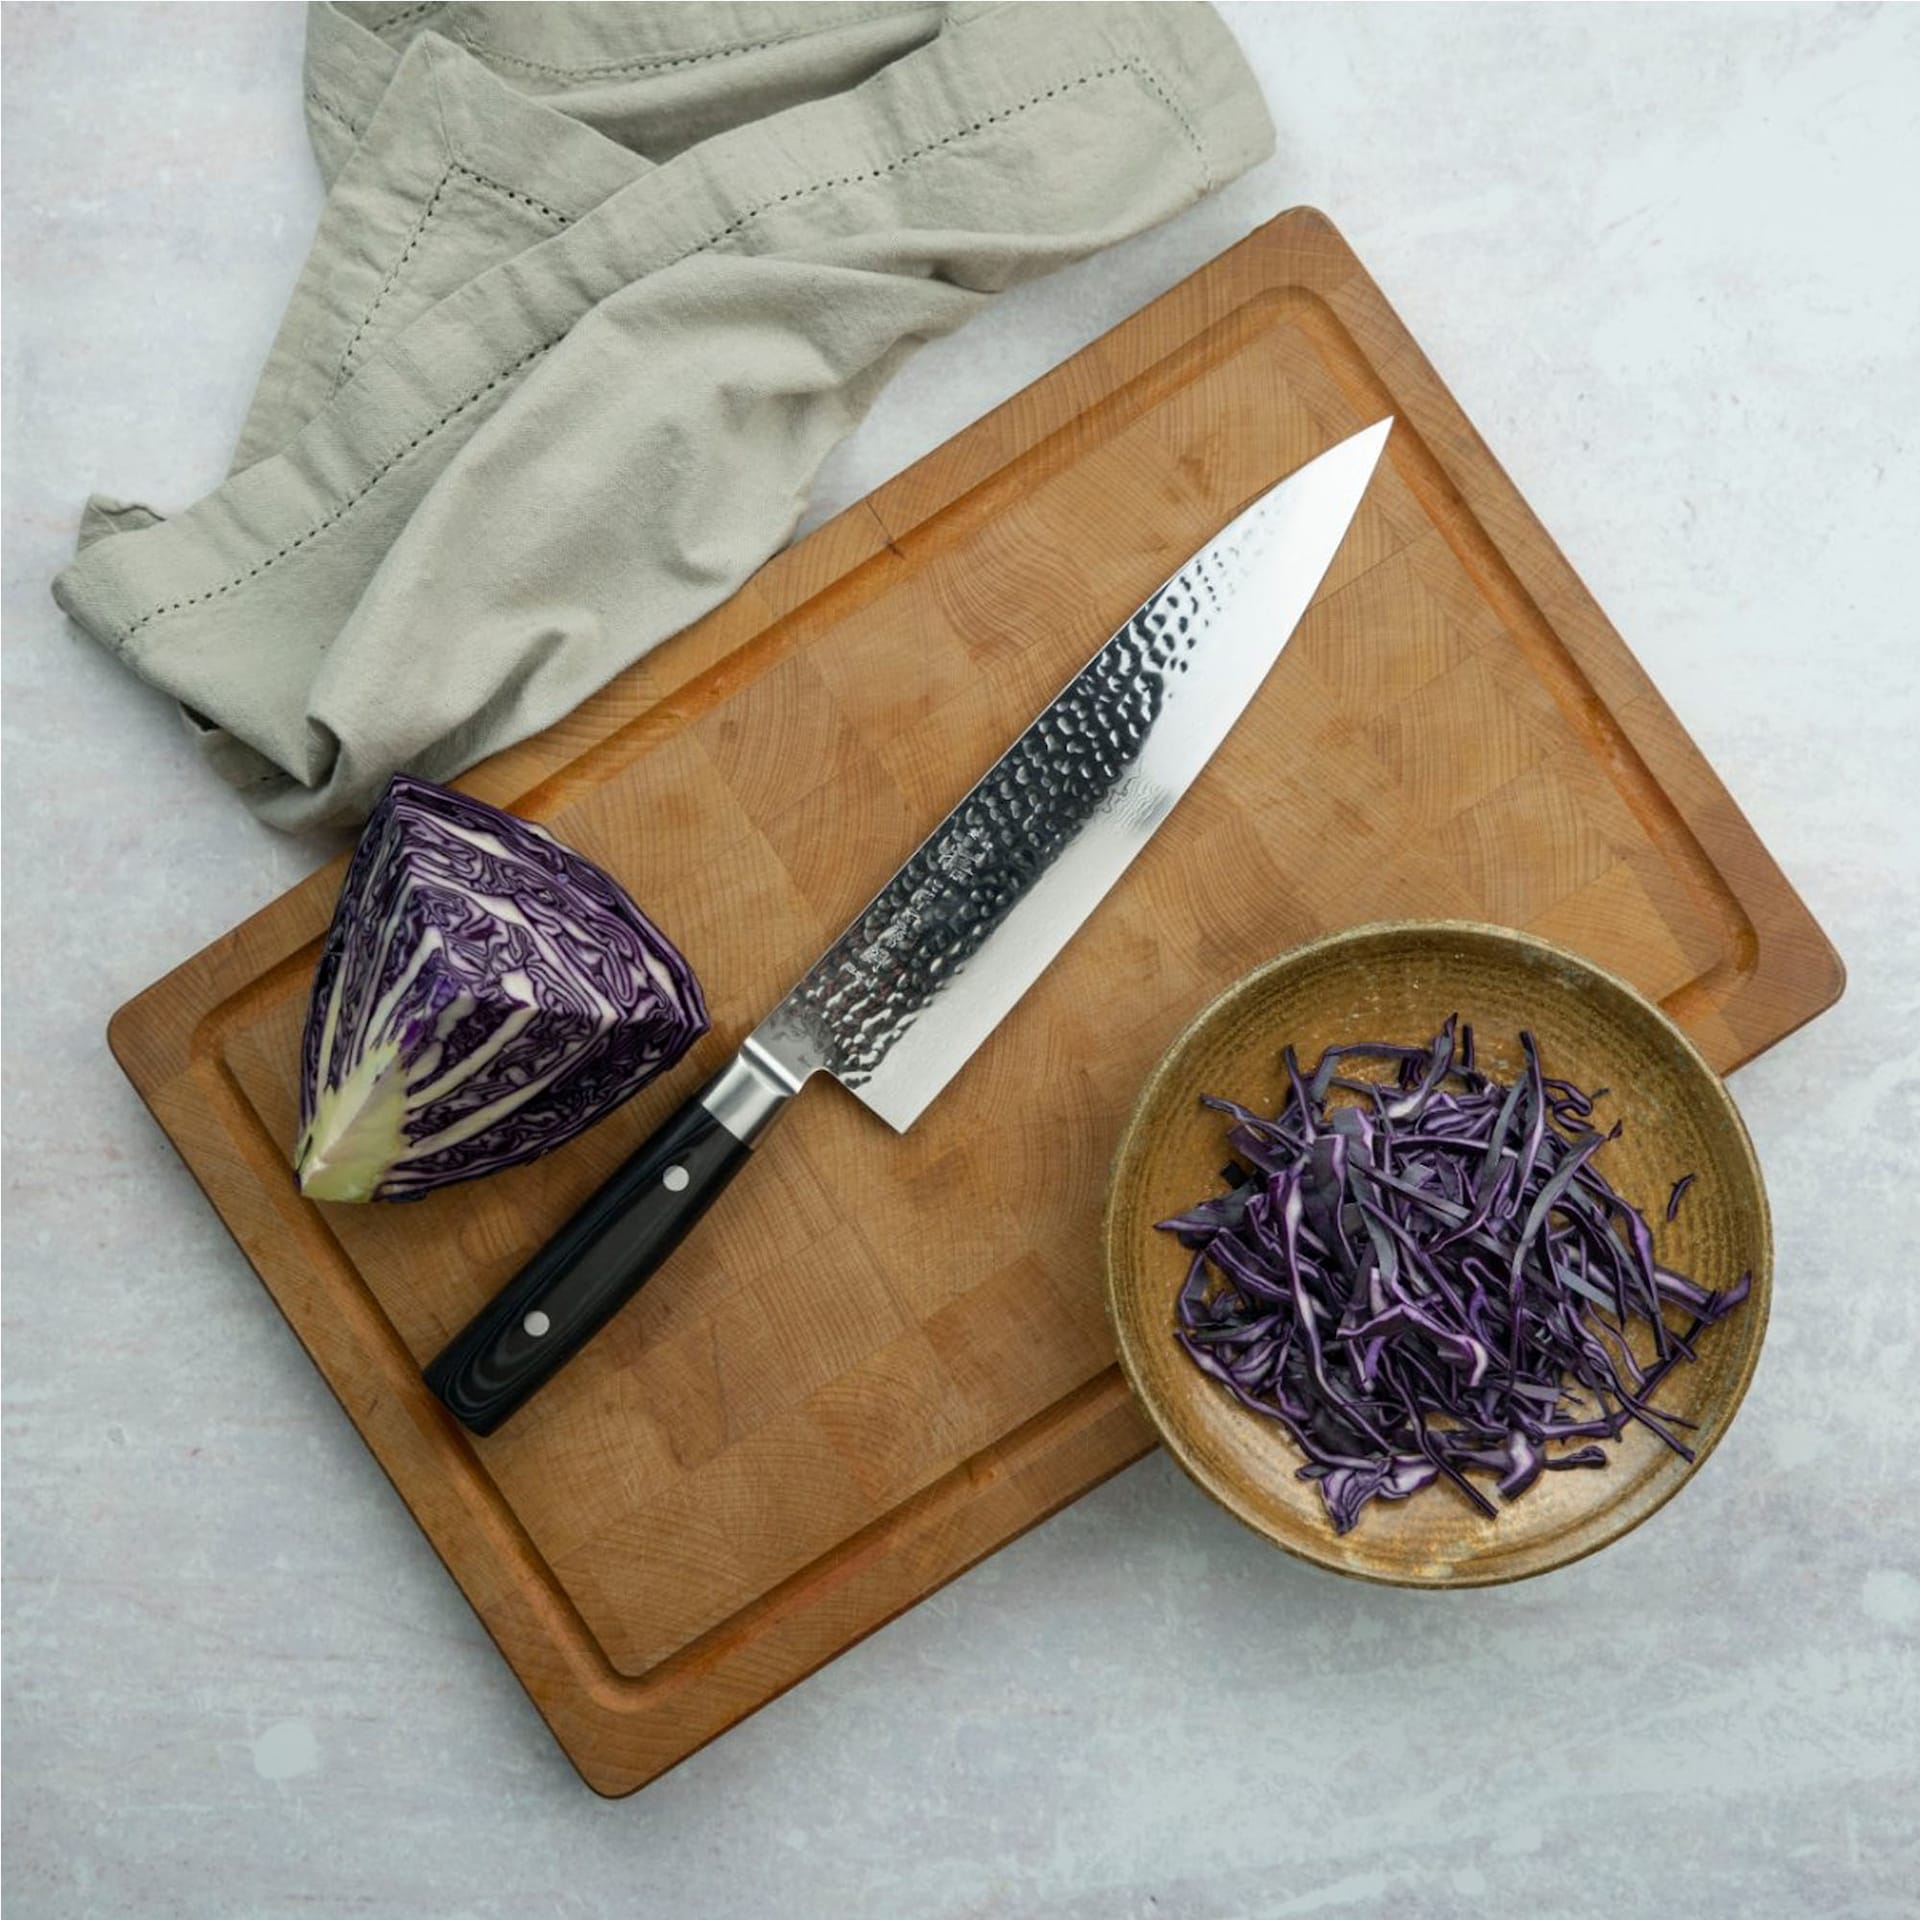 Yaxell Zen Chef&#39;s knife 24 cm - Yaxell - NO GA